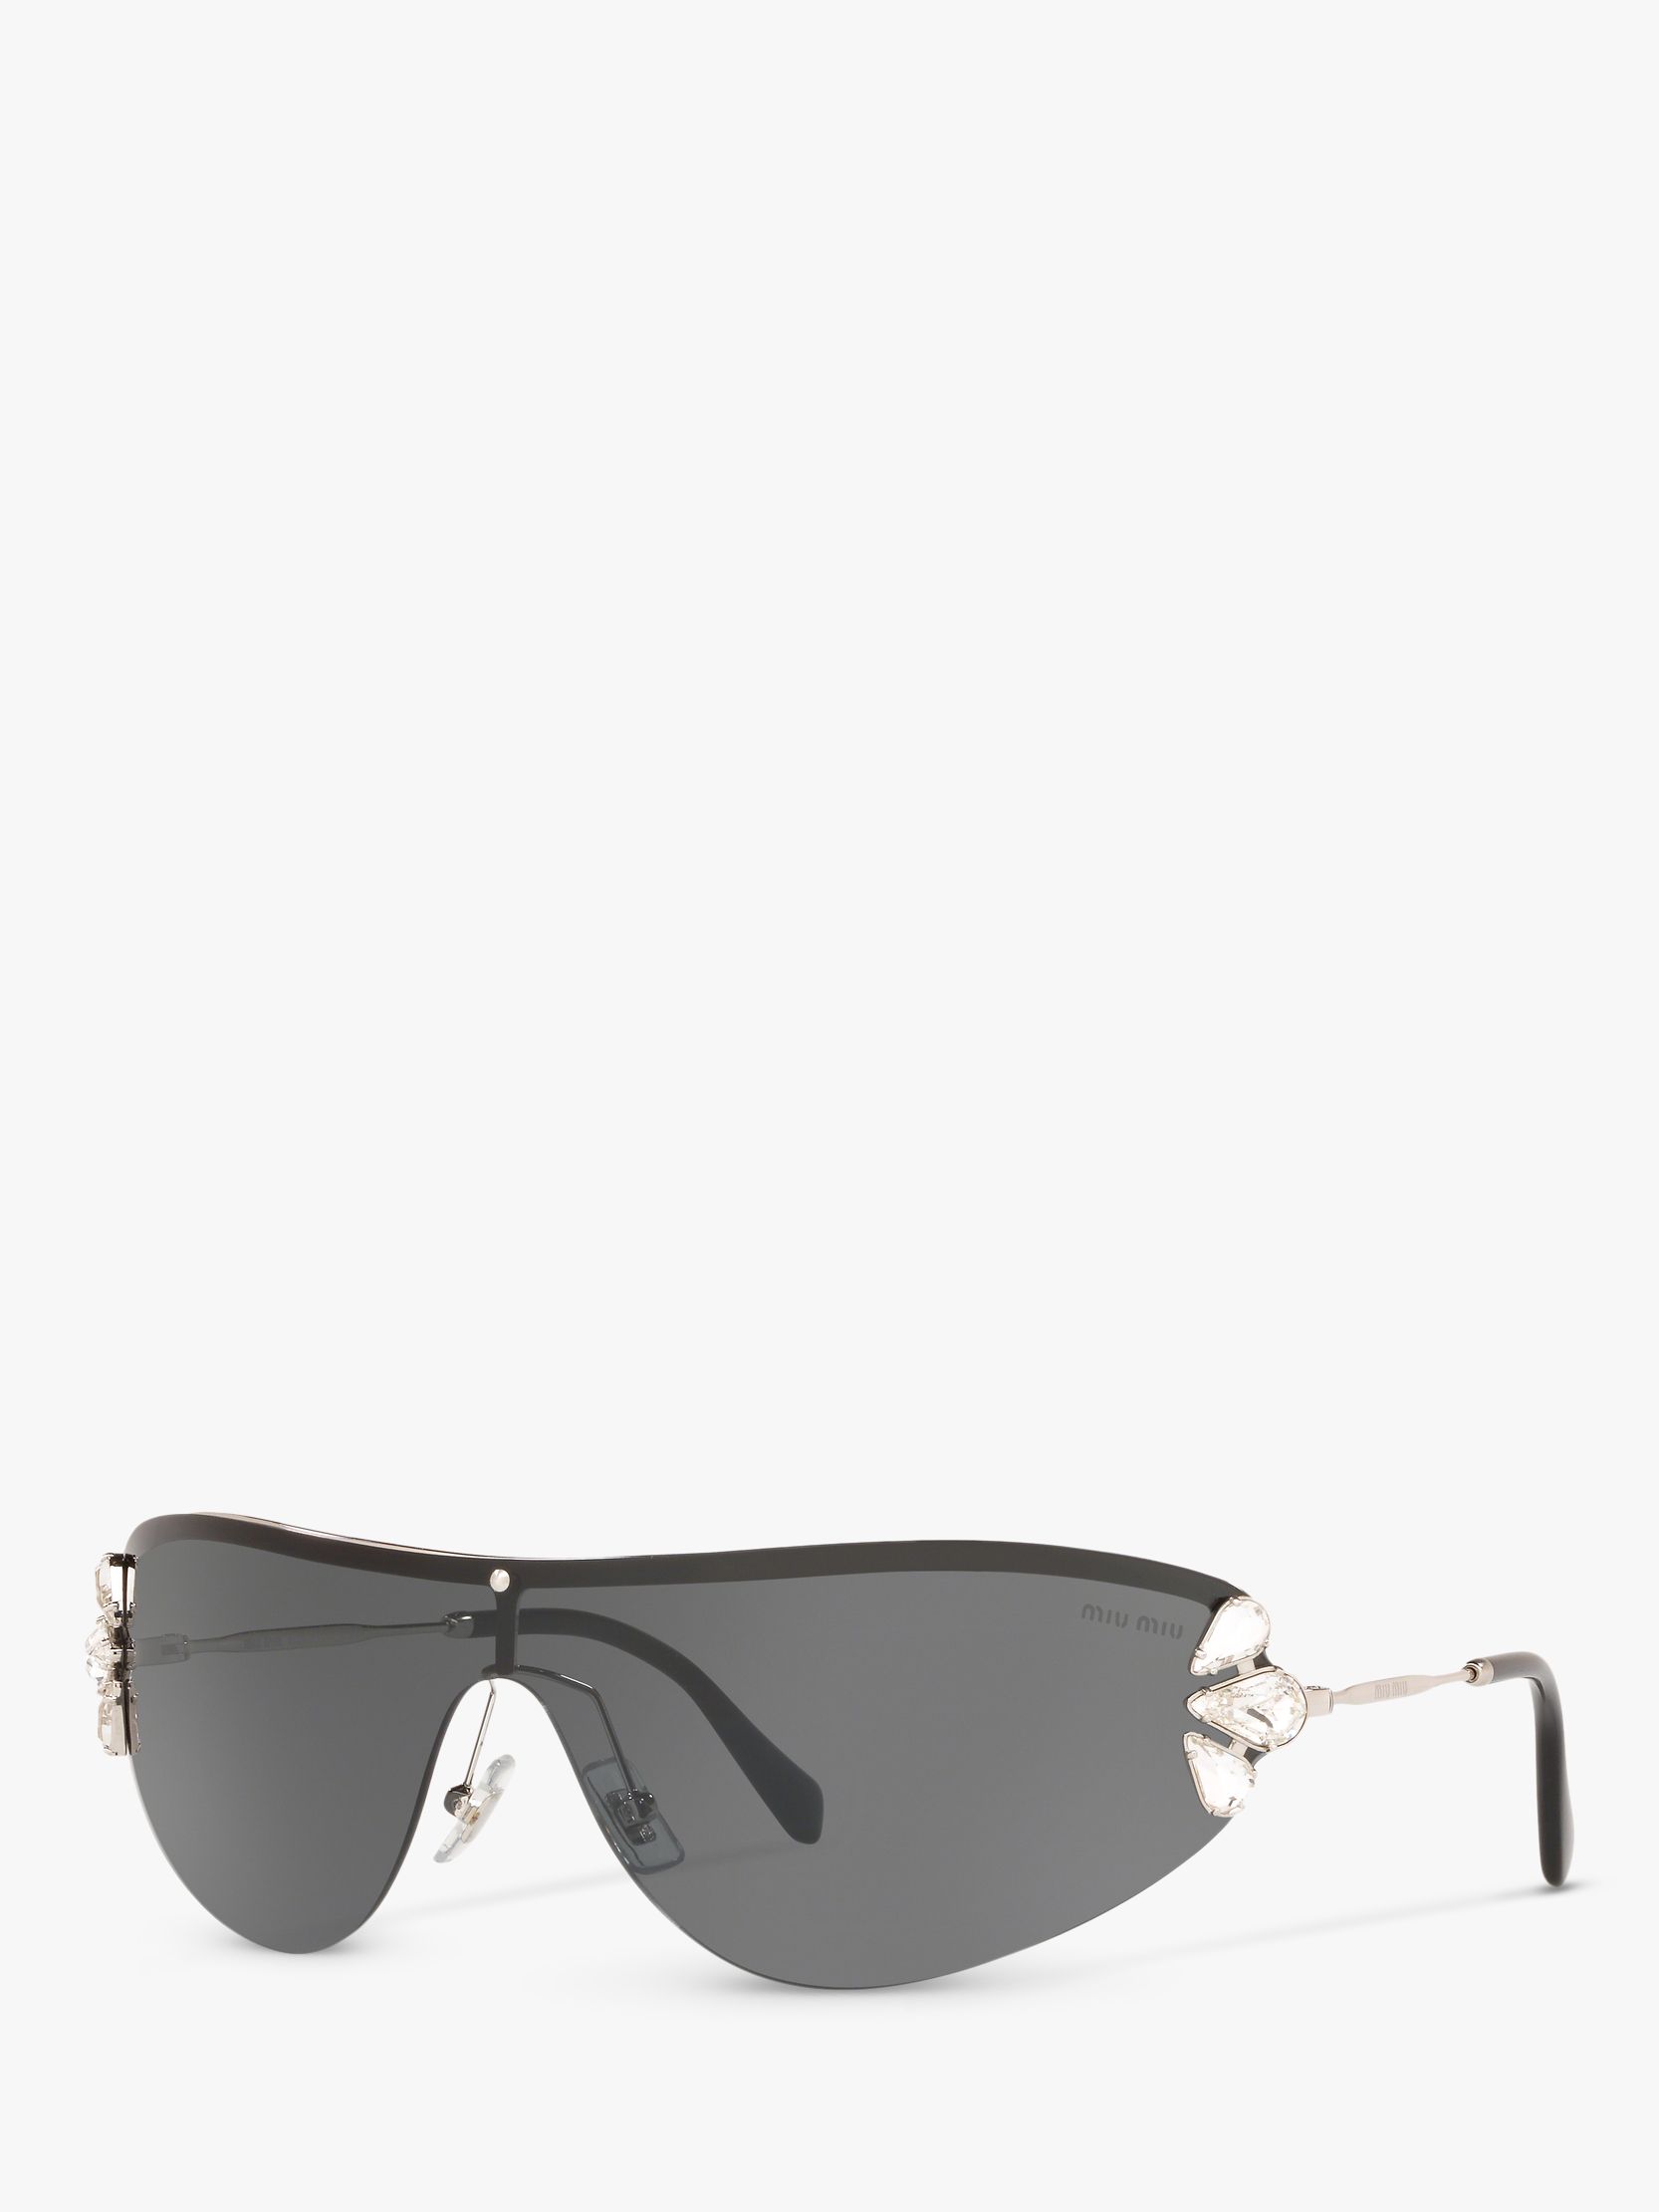 Miu Miu MU 66US Women's Crystal Embellished Sunglasses, Silver/Grey